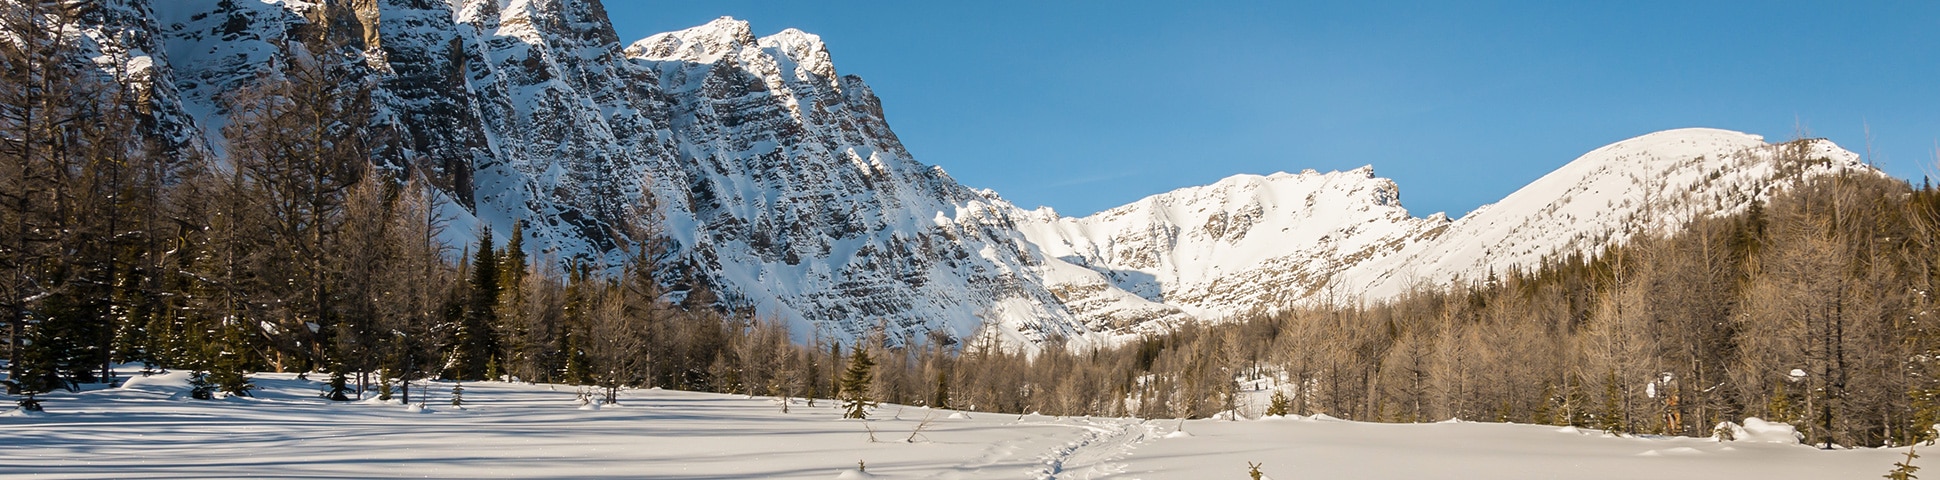 Best snowshoeing trails in Banff National Park